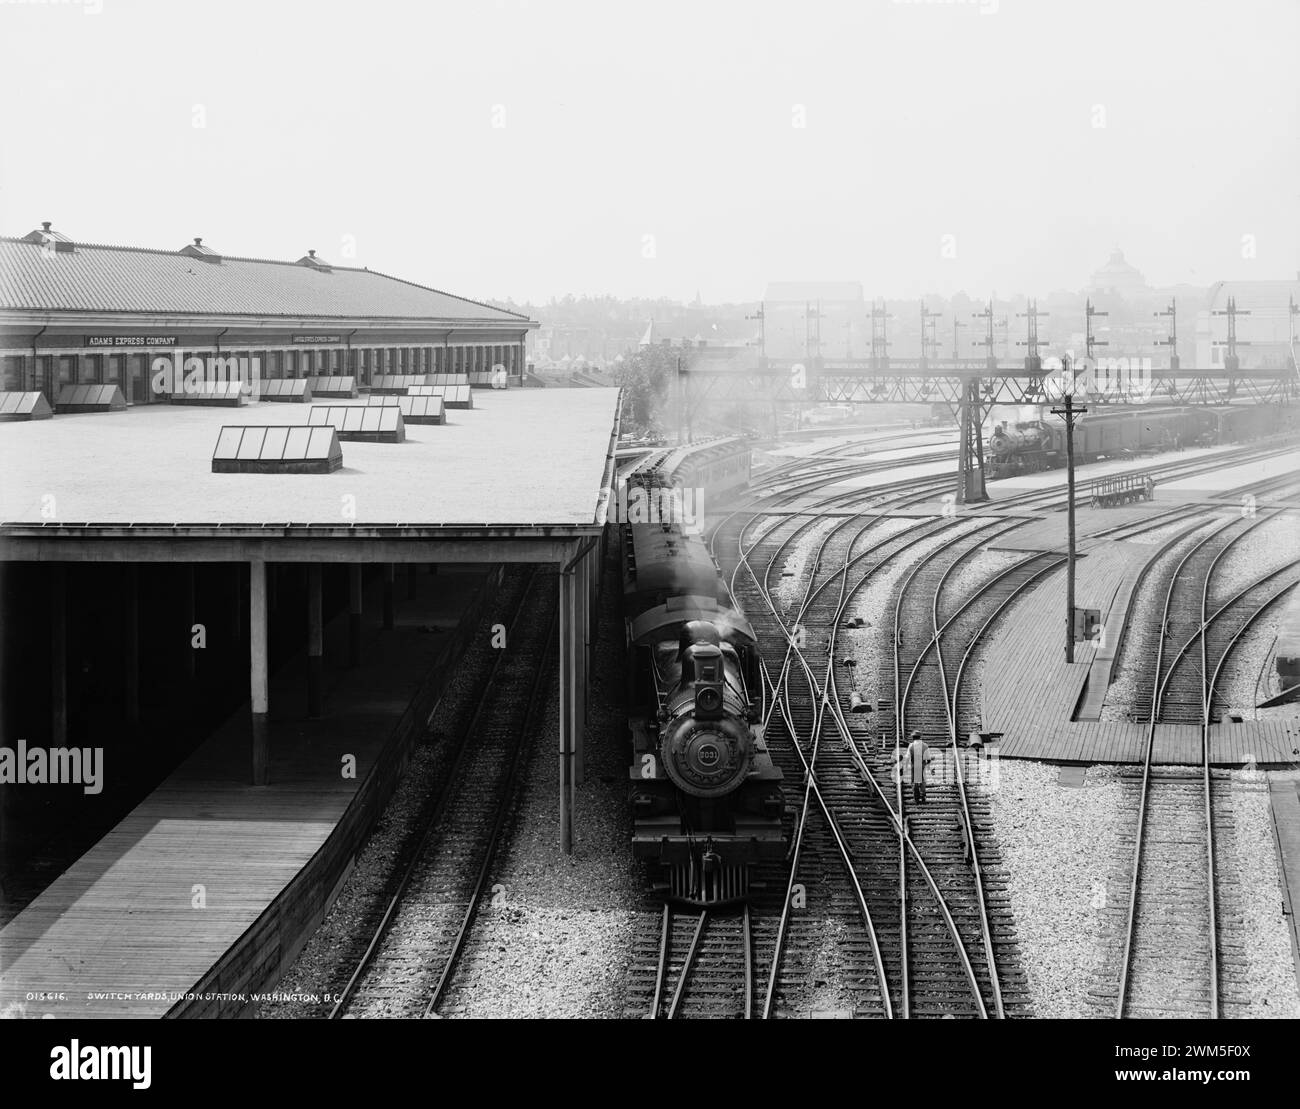 Switch yards, Union Station, Washington, D.C. - locomotive, steam train - Detroit Publ. Co ca 1908 Stock Photo